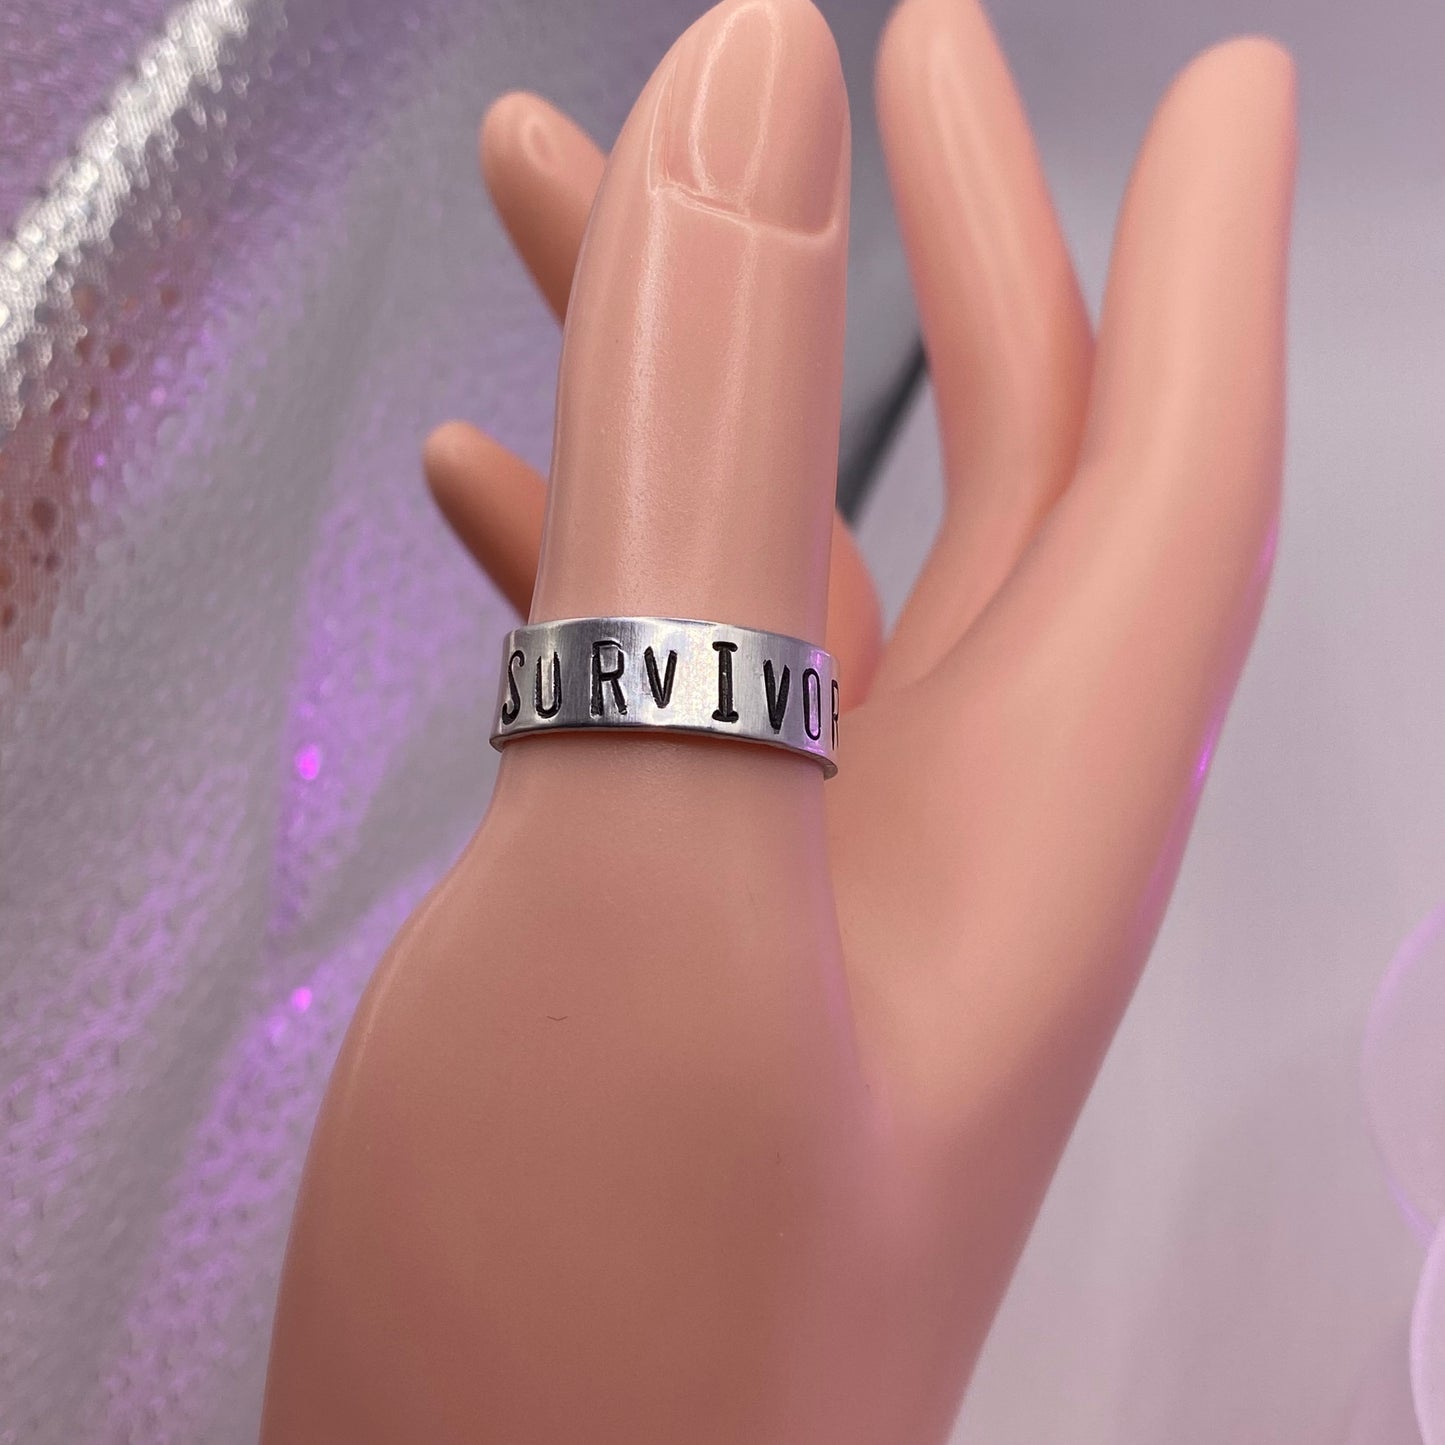 Survivor Stamped Ring